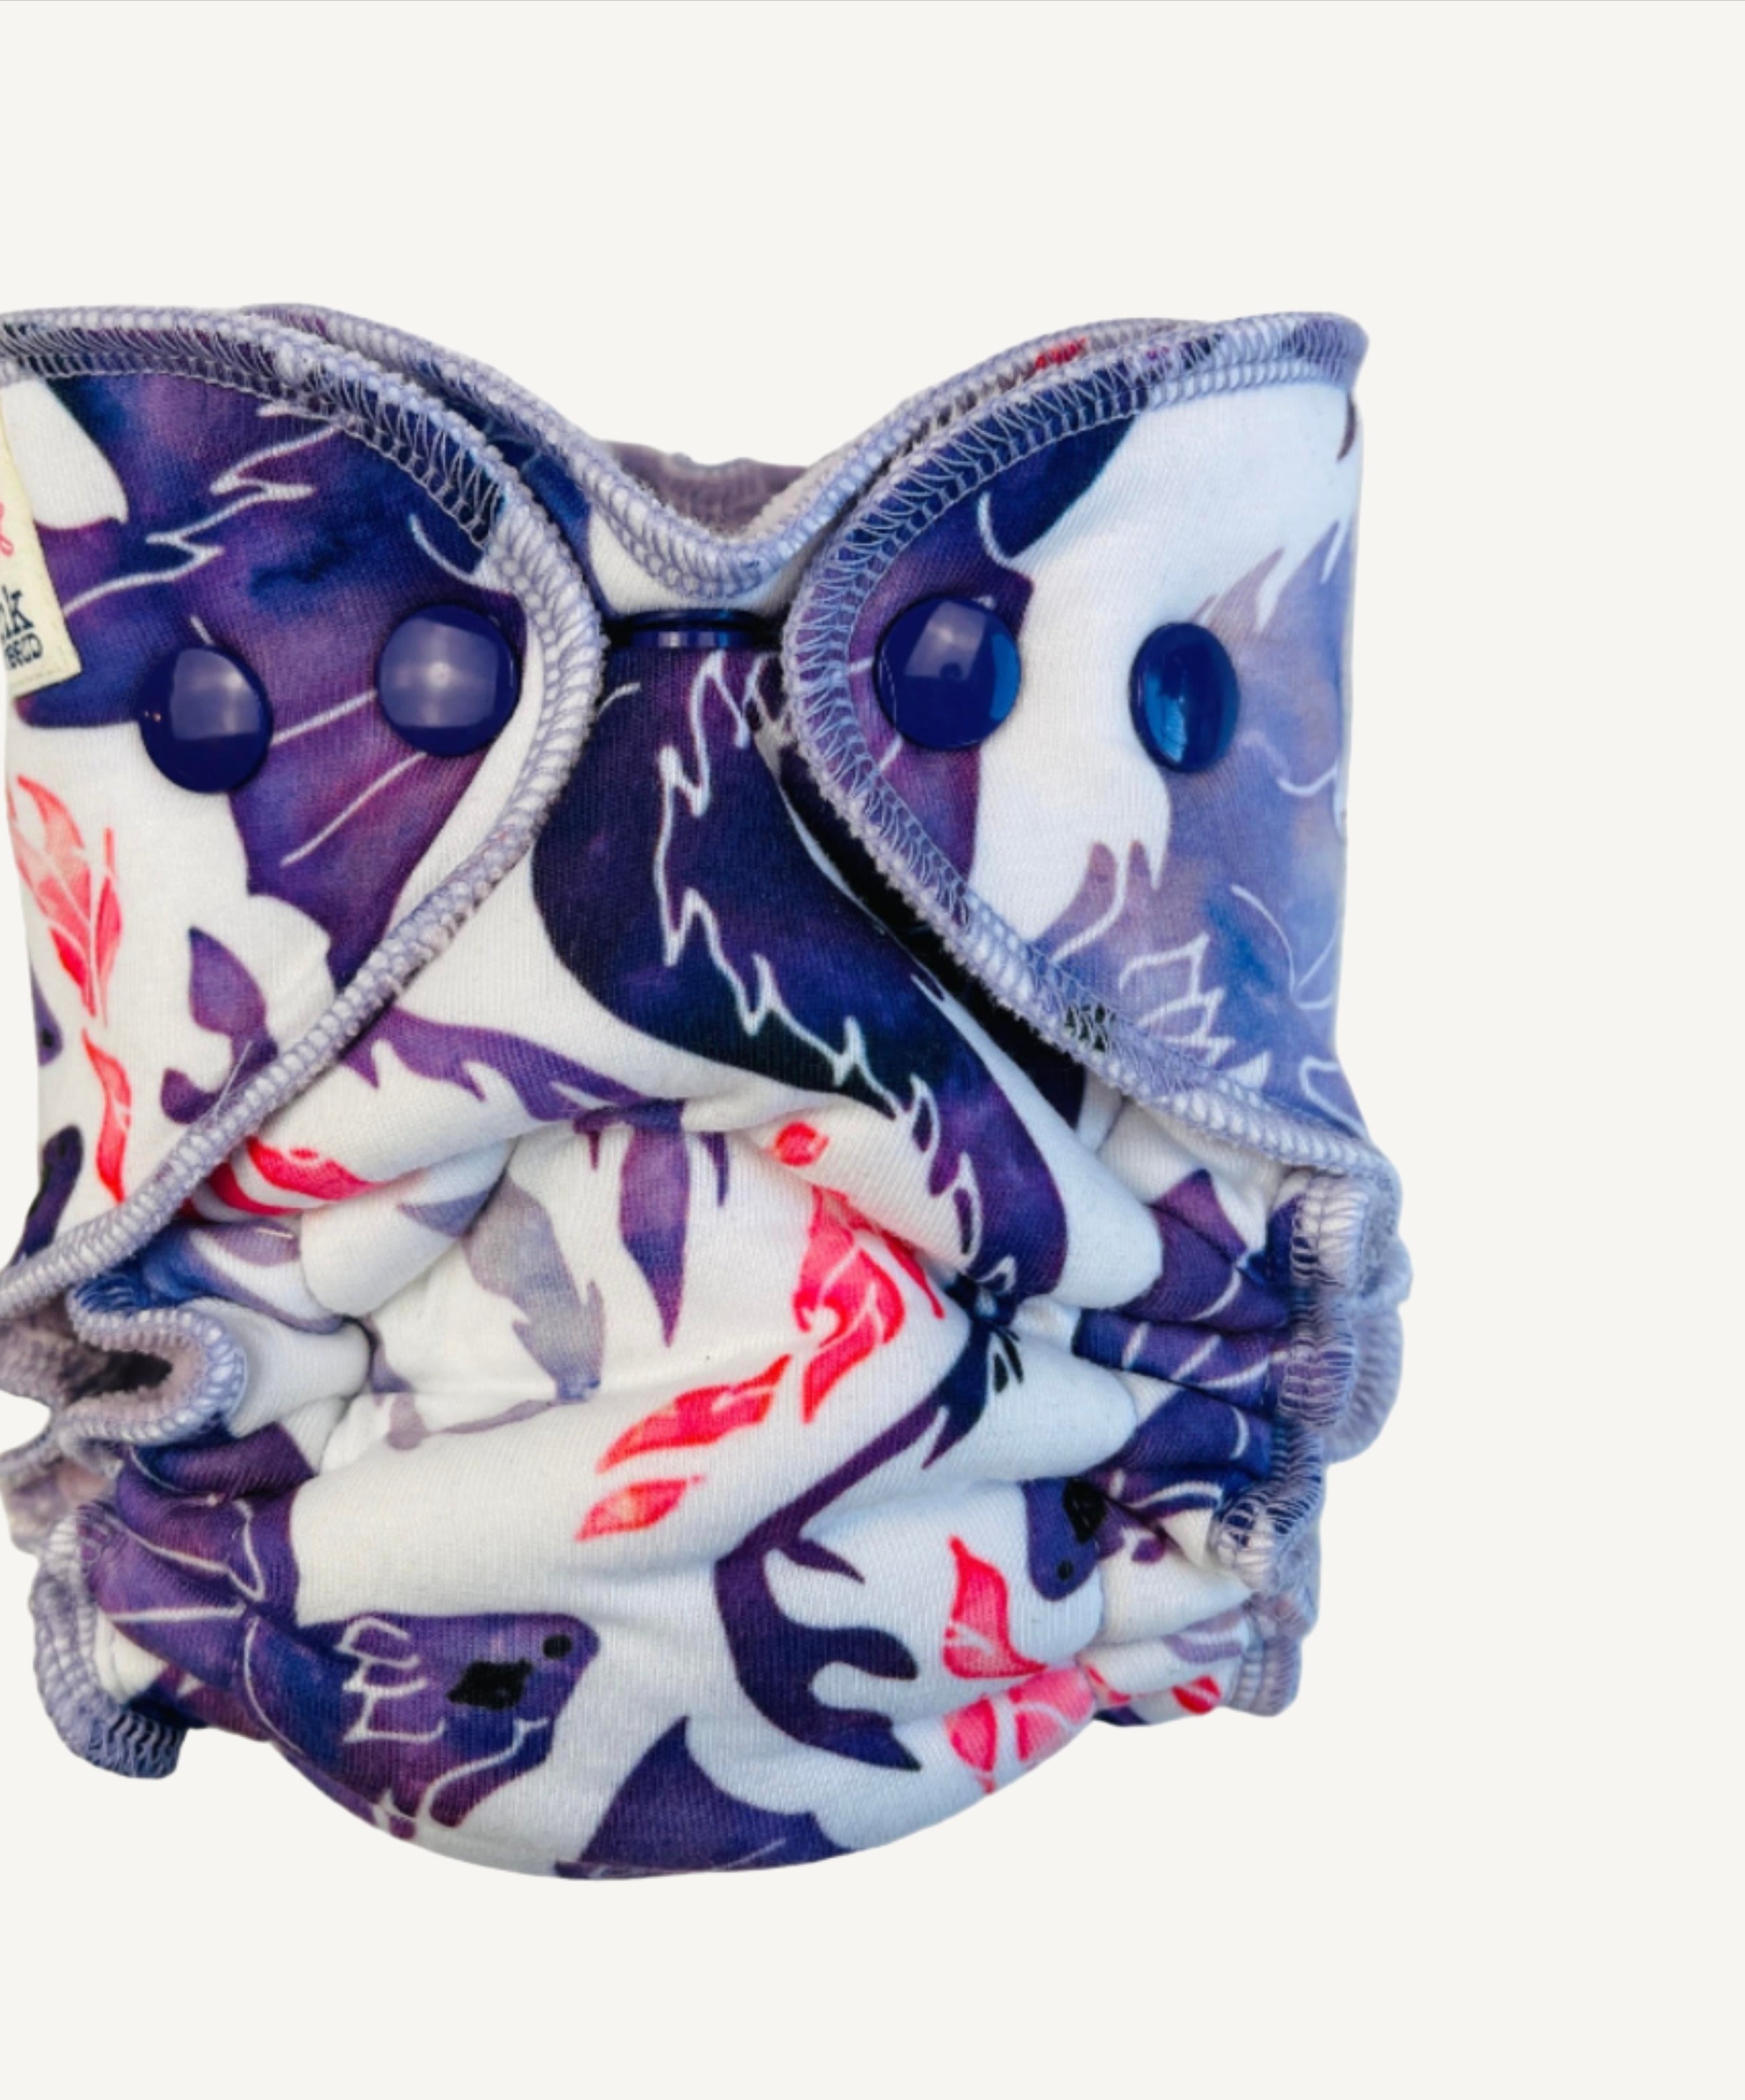 Lilly & Frank Cloth Diaper Dragon Fire Newborn Cloth Diaper - Hybrid - Serged